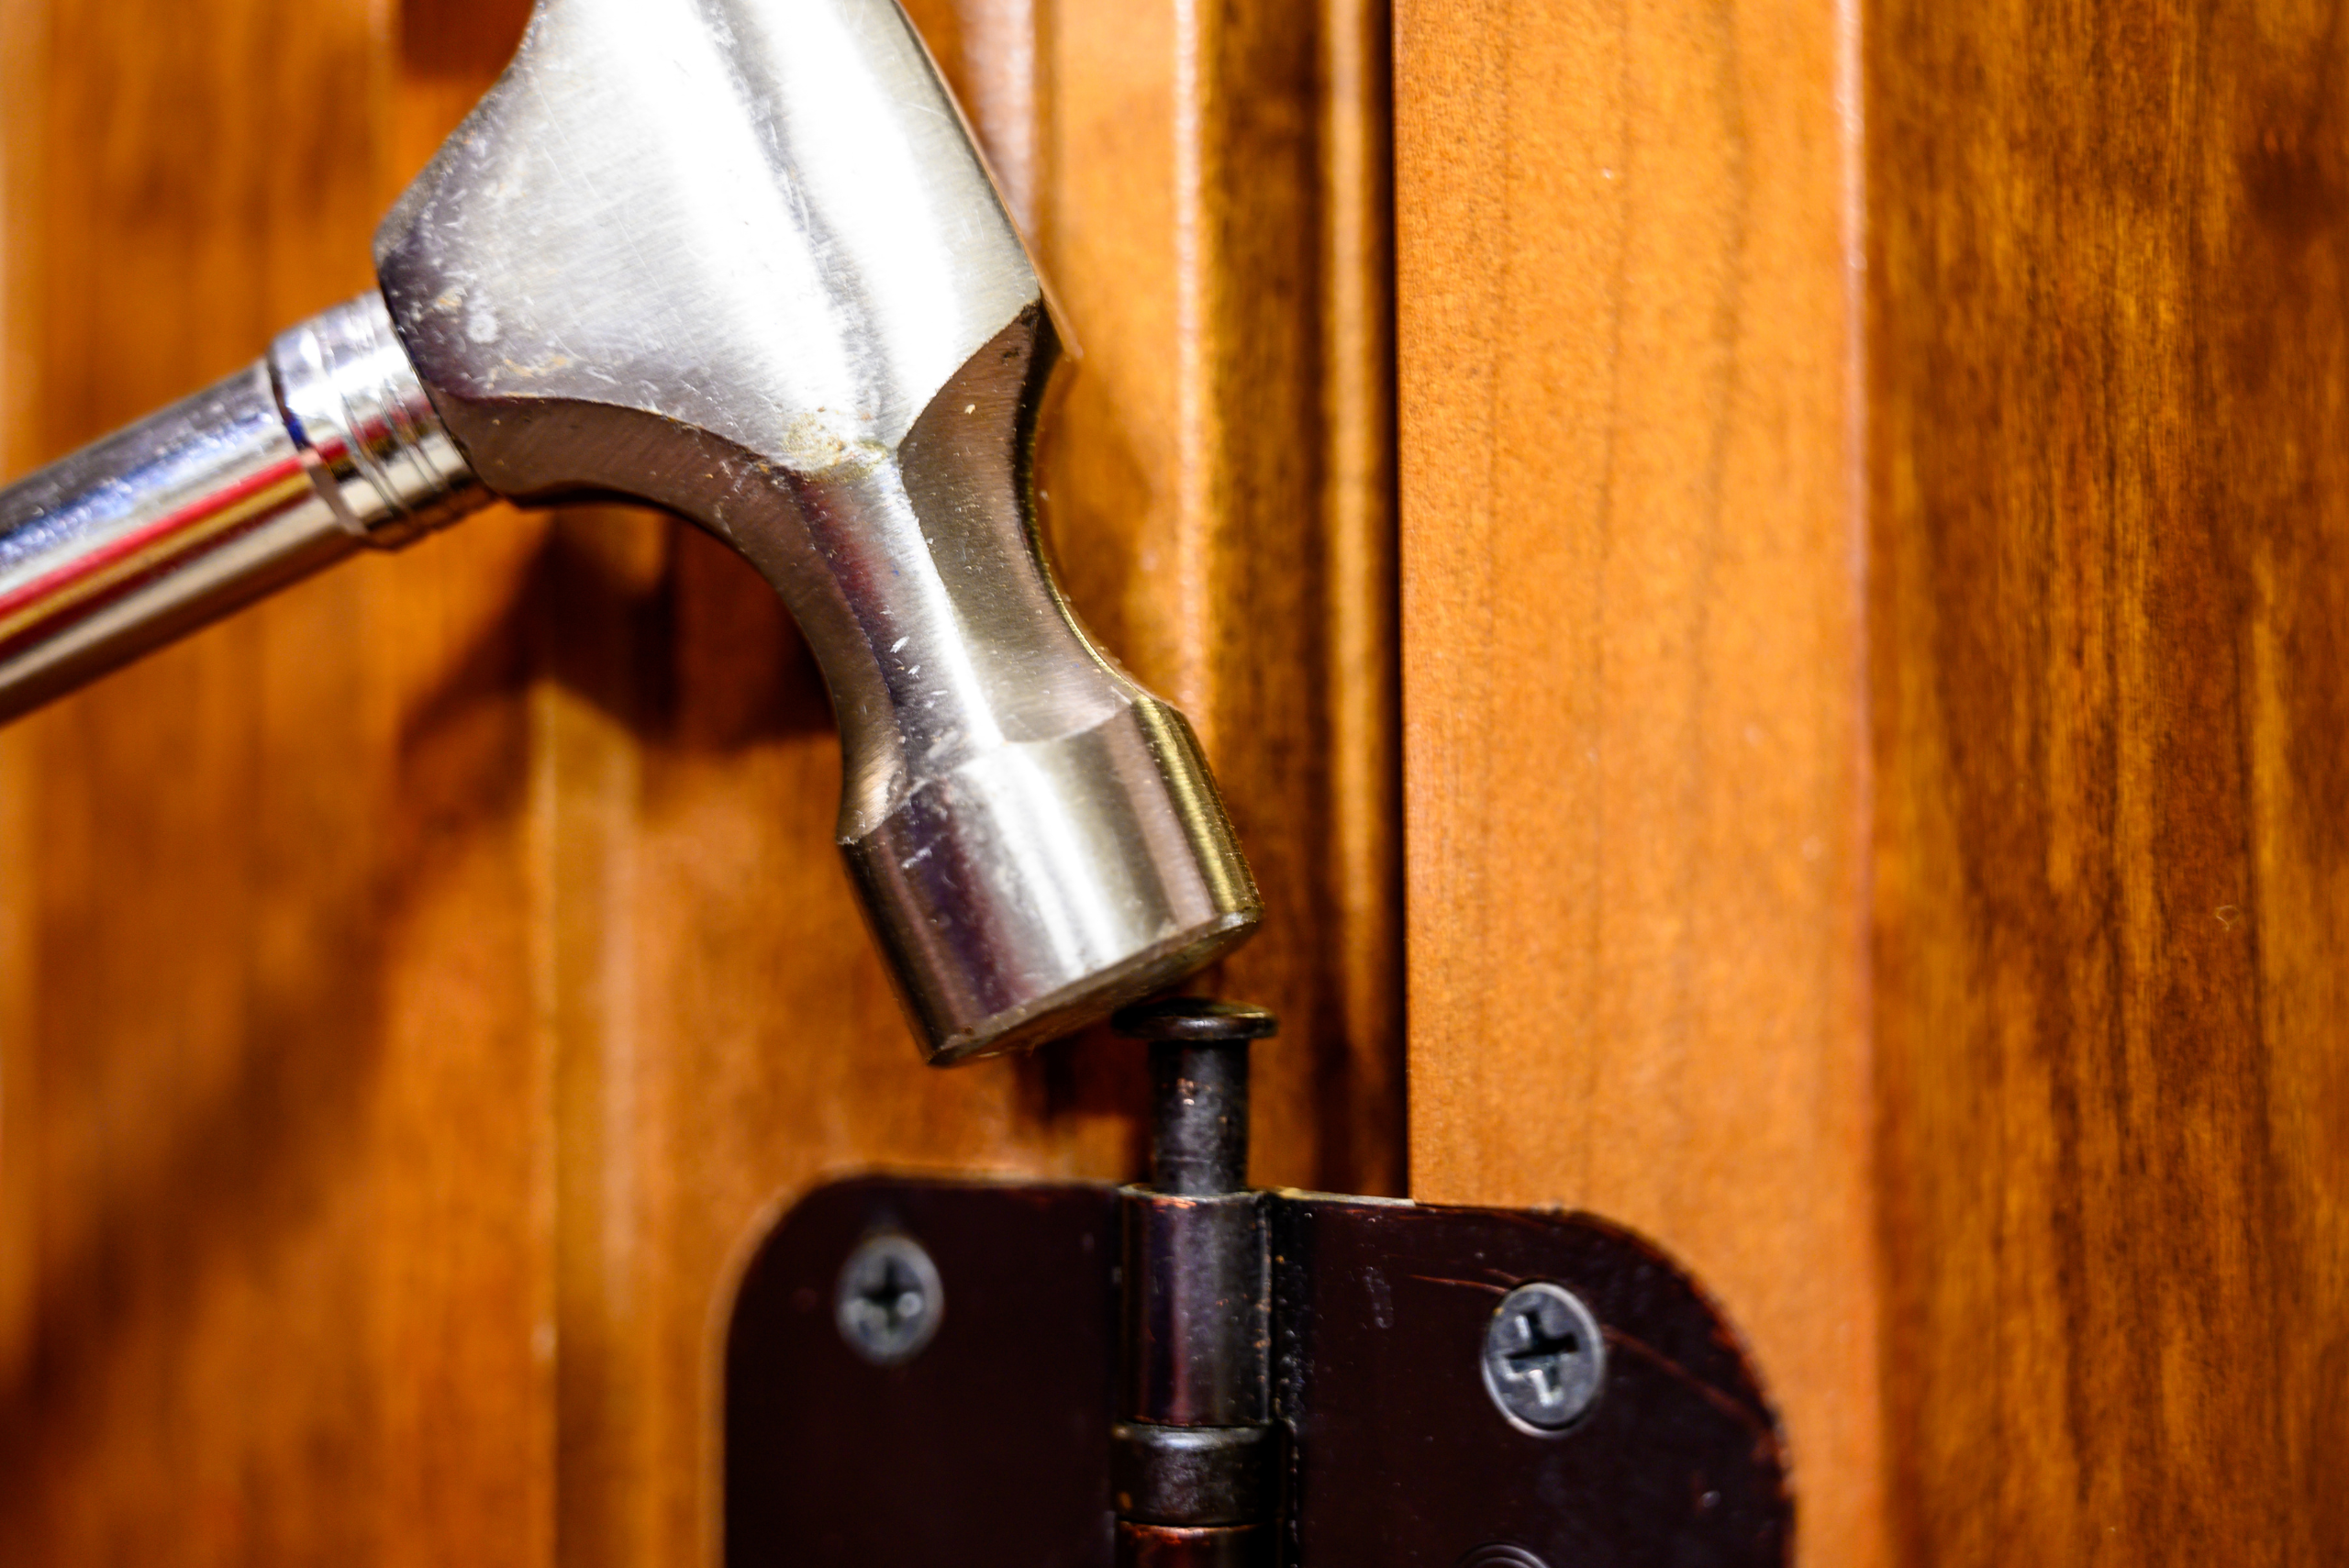 Hammer striking door pin back into its hinge.